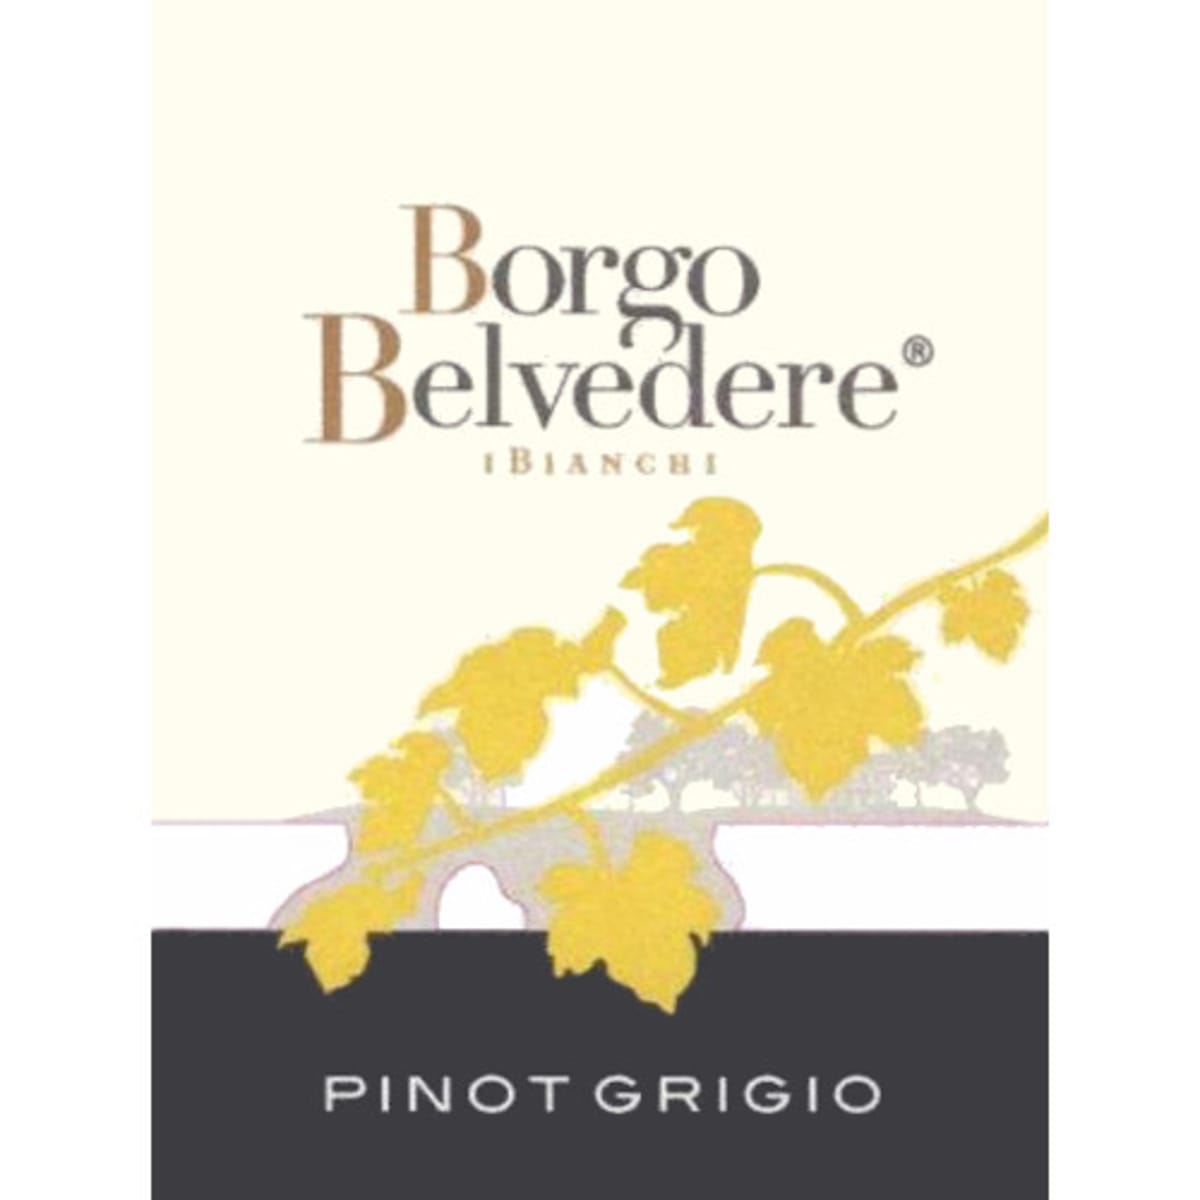 Borgo Belvedere Pinot Grigio delle Venezie 2009 Front Label